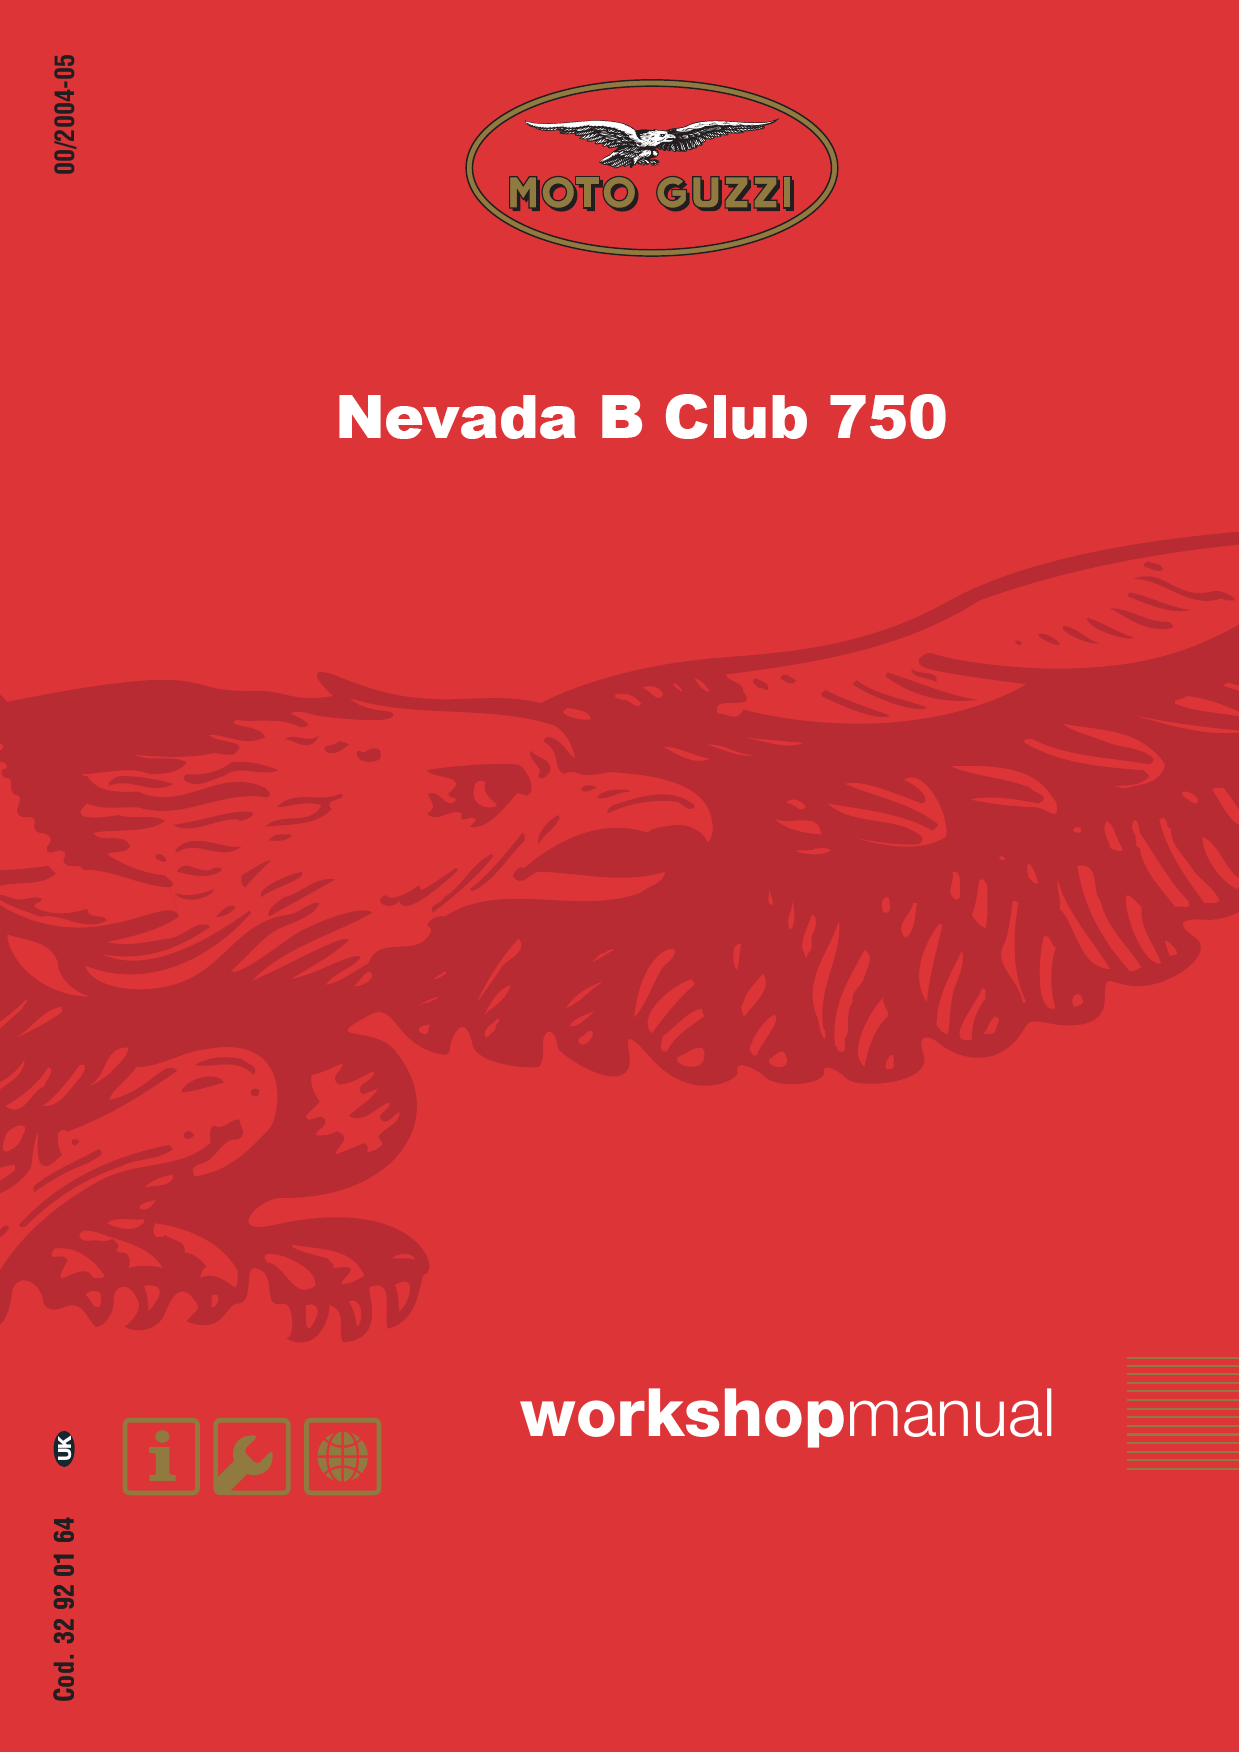 Moto Guzzi Nevada B Club 750 models 1999 to 2004 Service Manual original motorcycle manufacturer's PDF repair manual download